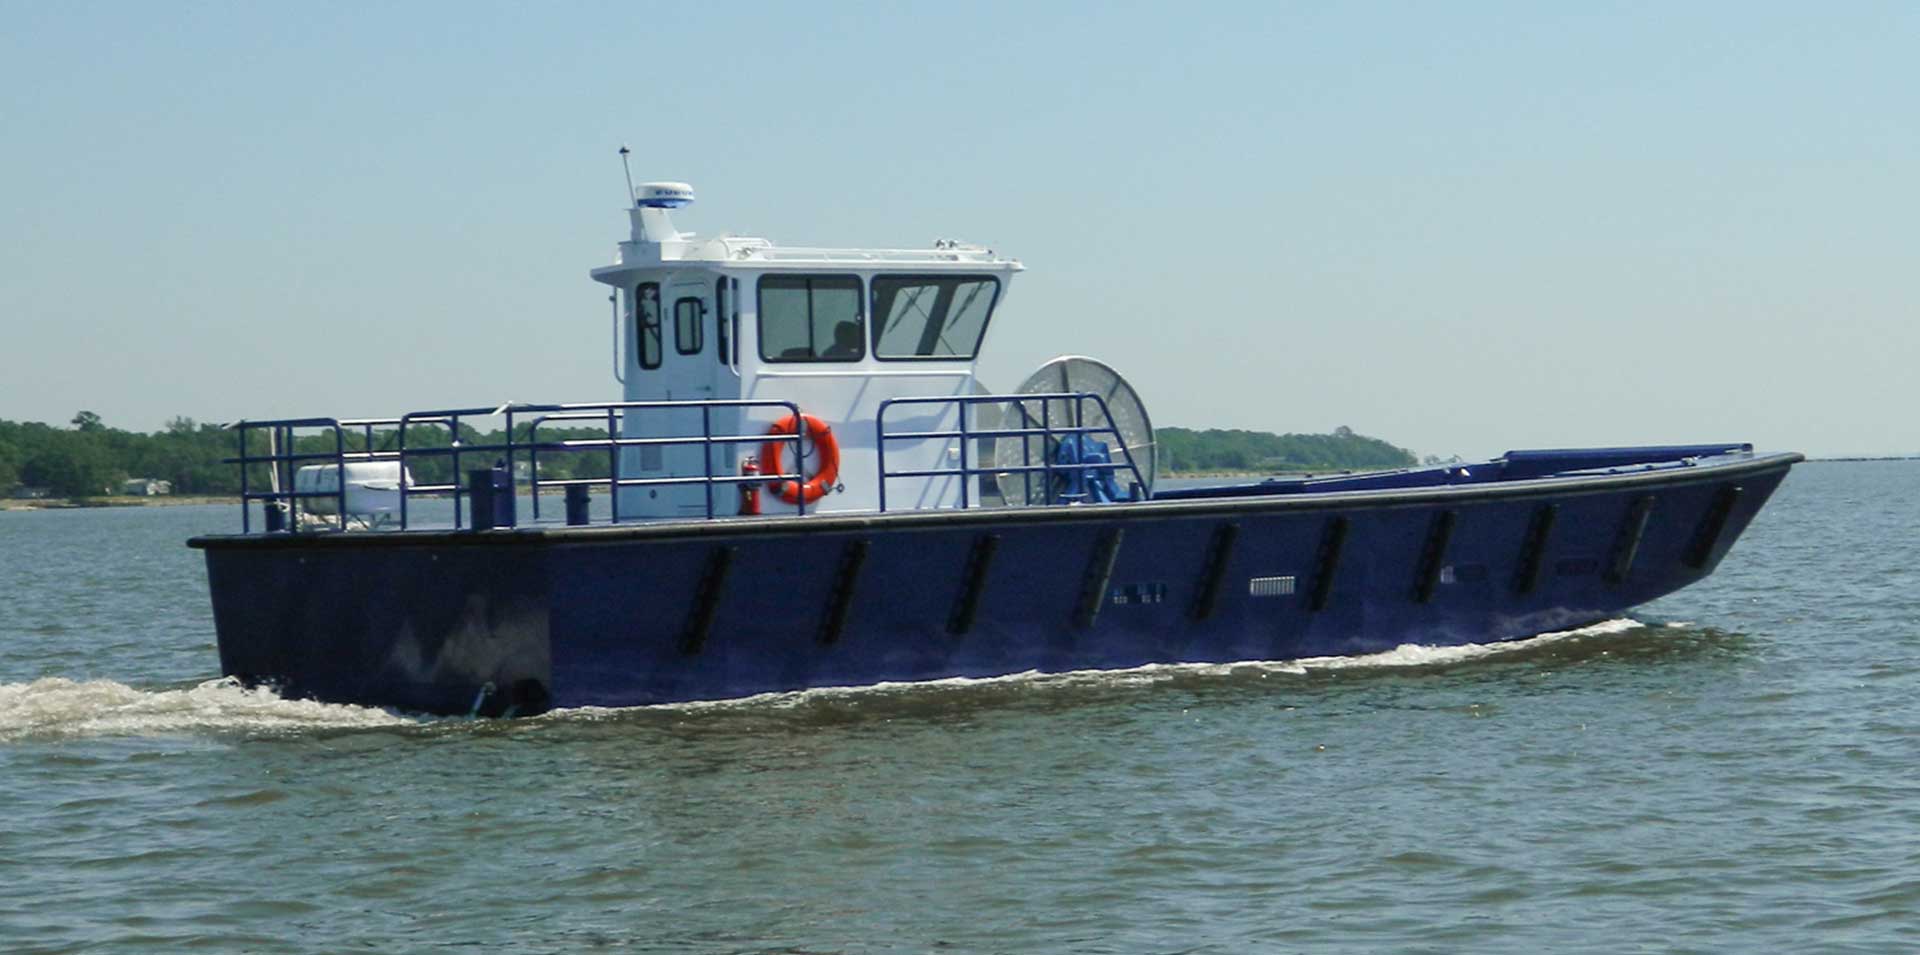 Workboat